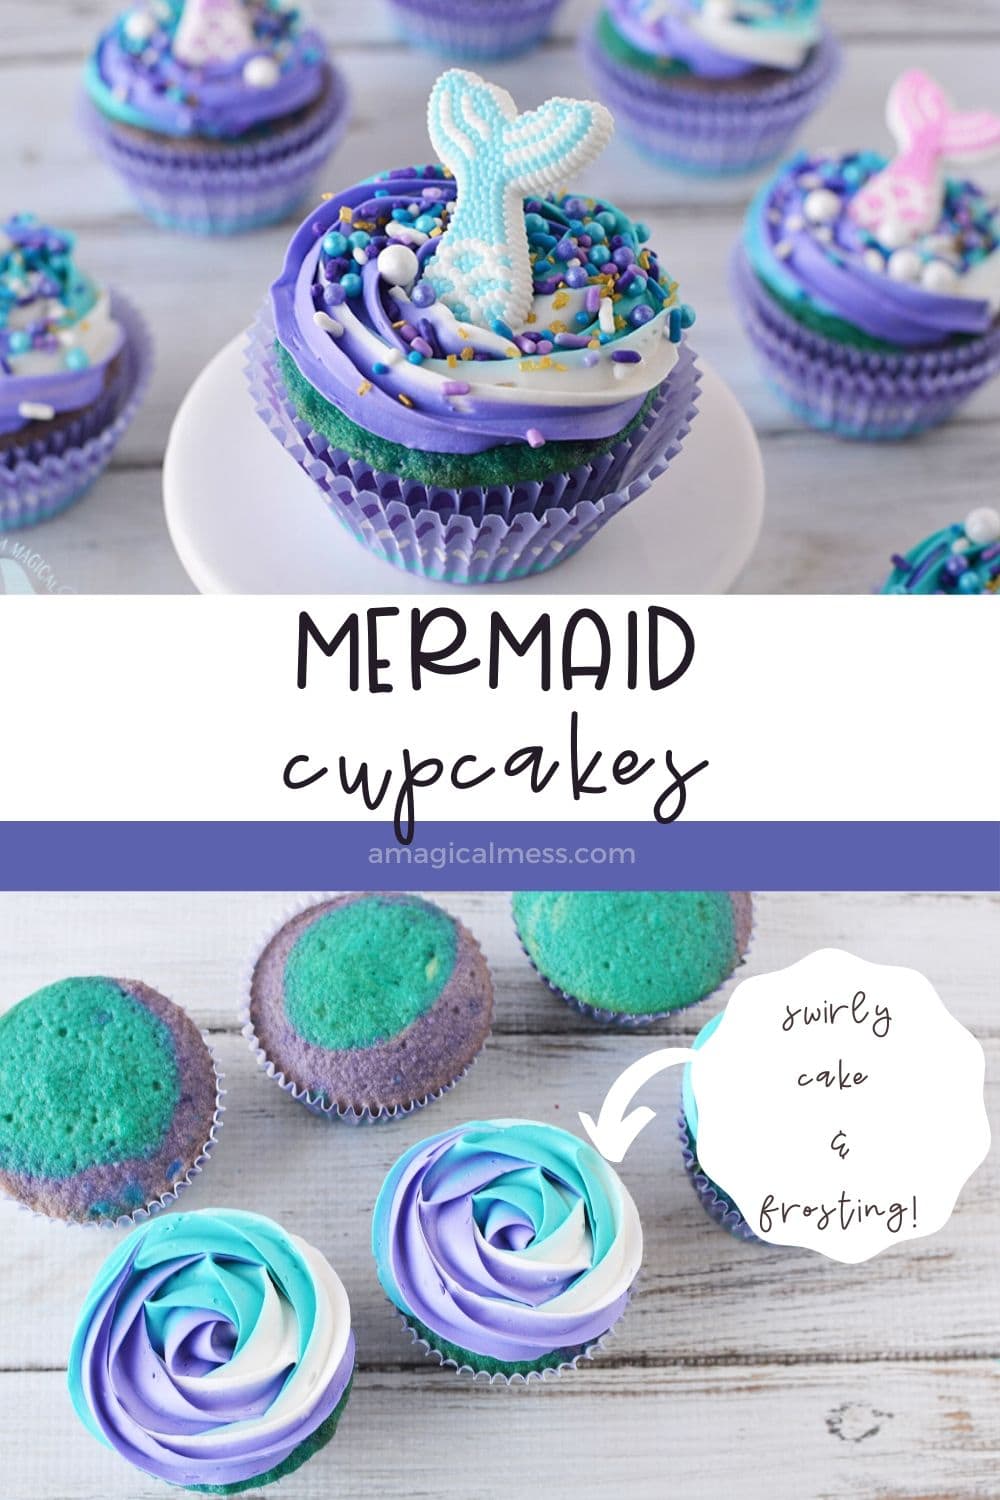  blaue wirbelnde Cupcakes mit Meerjungfrauenflossen